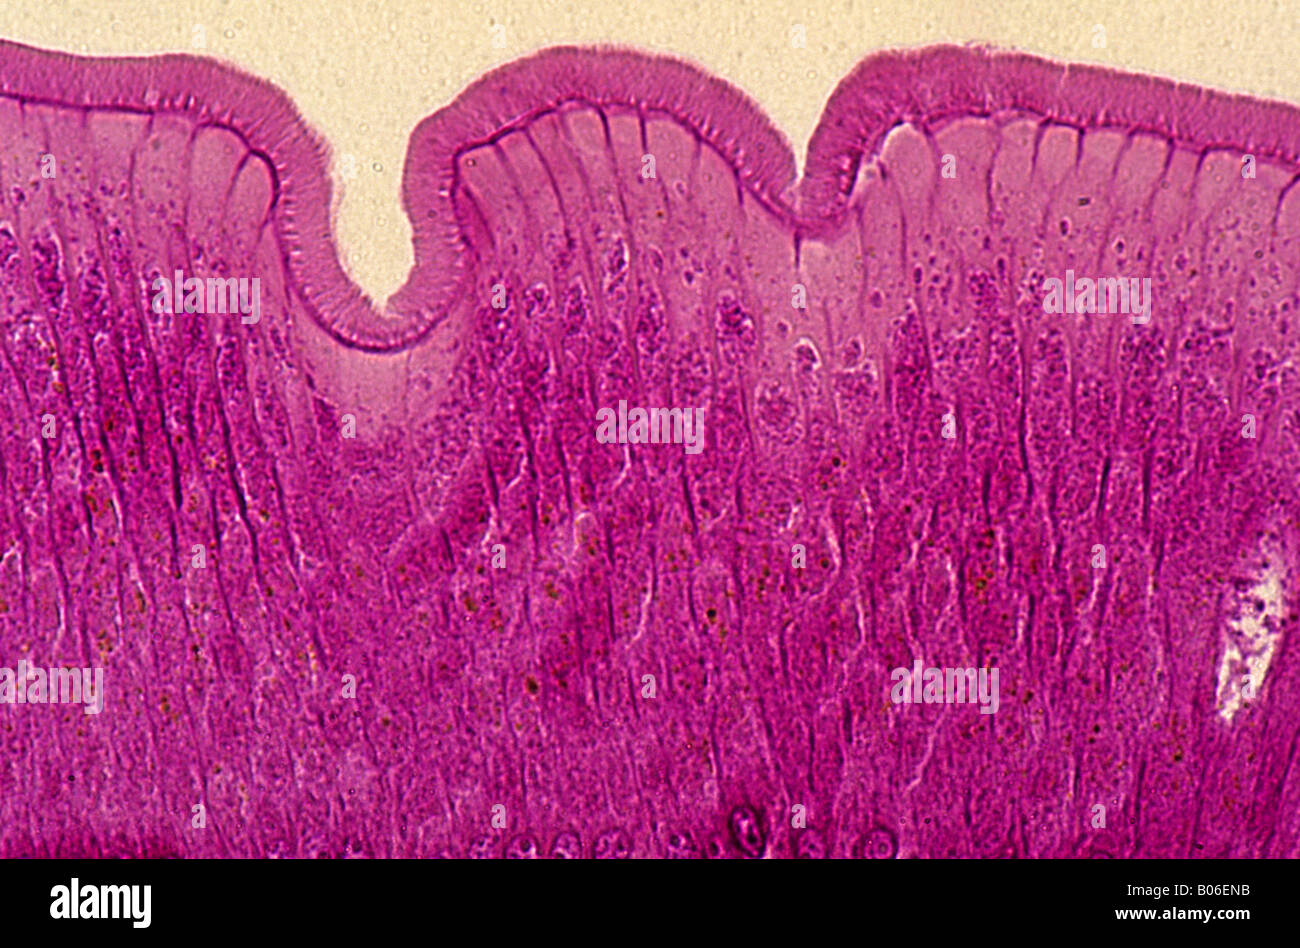 Epithelial cells of intestine of Ascaris 140x Stock Photo